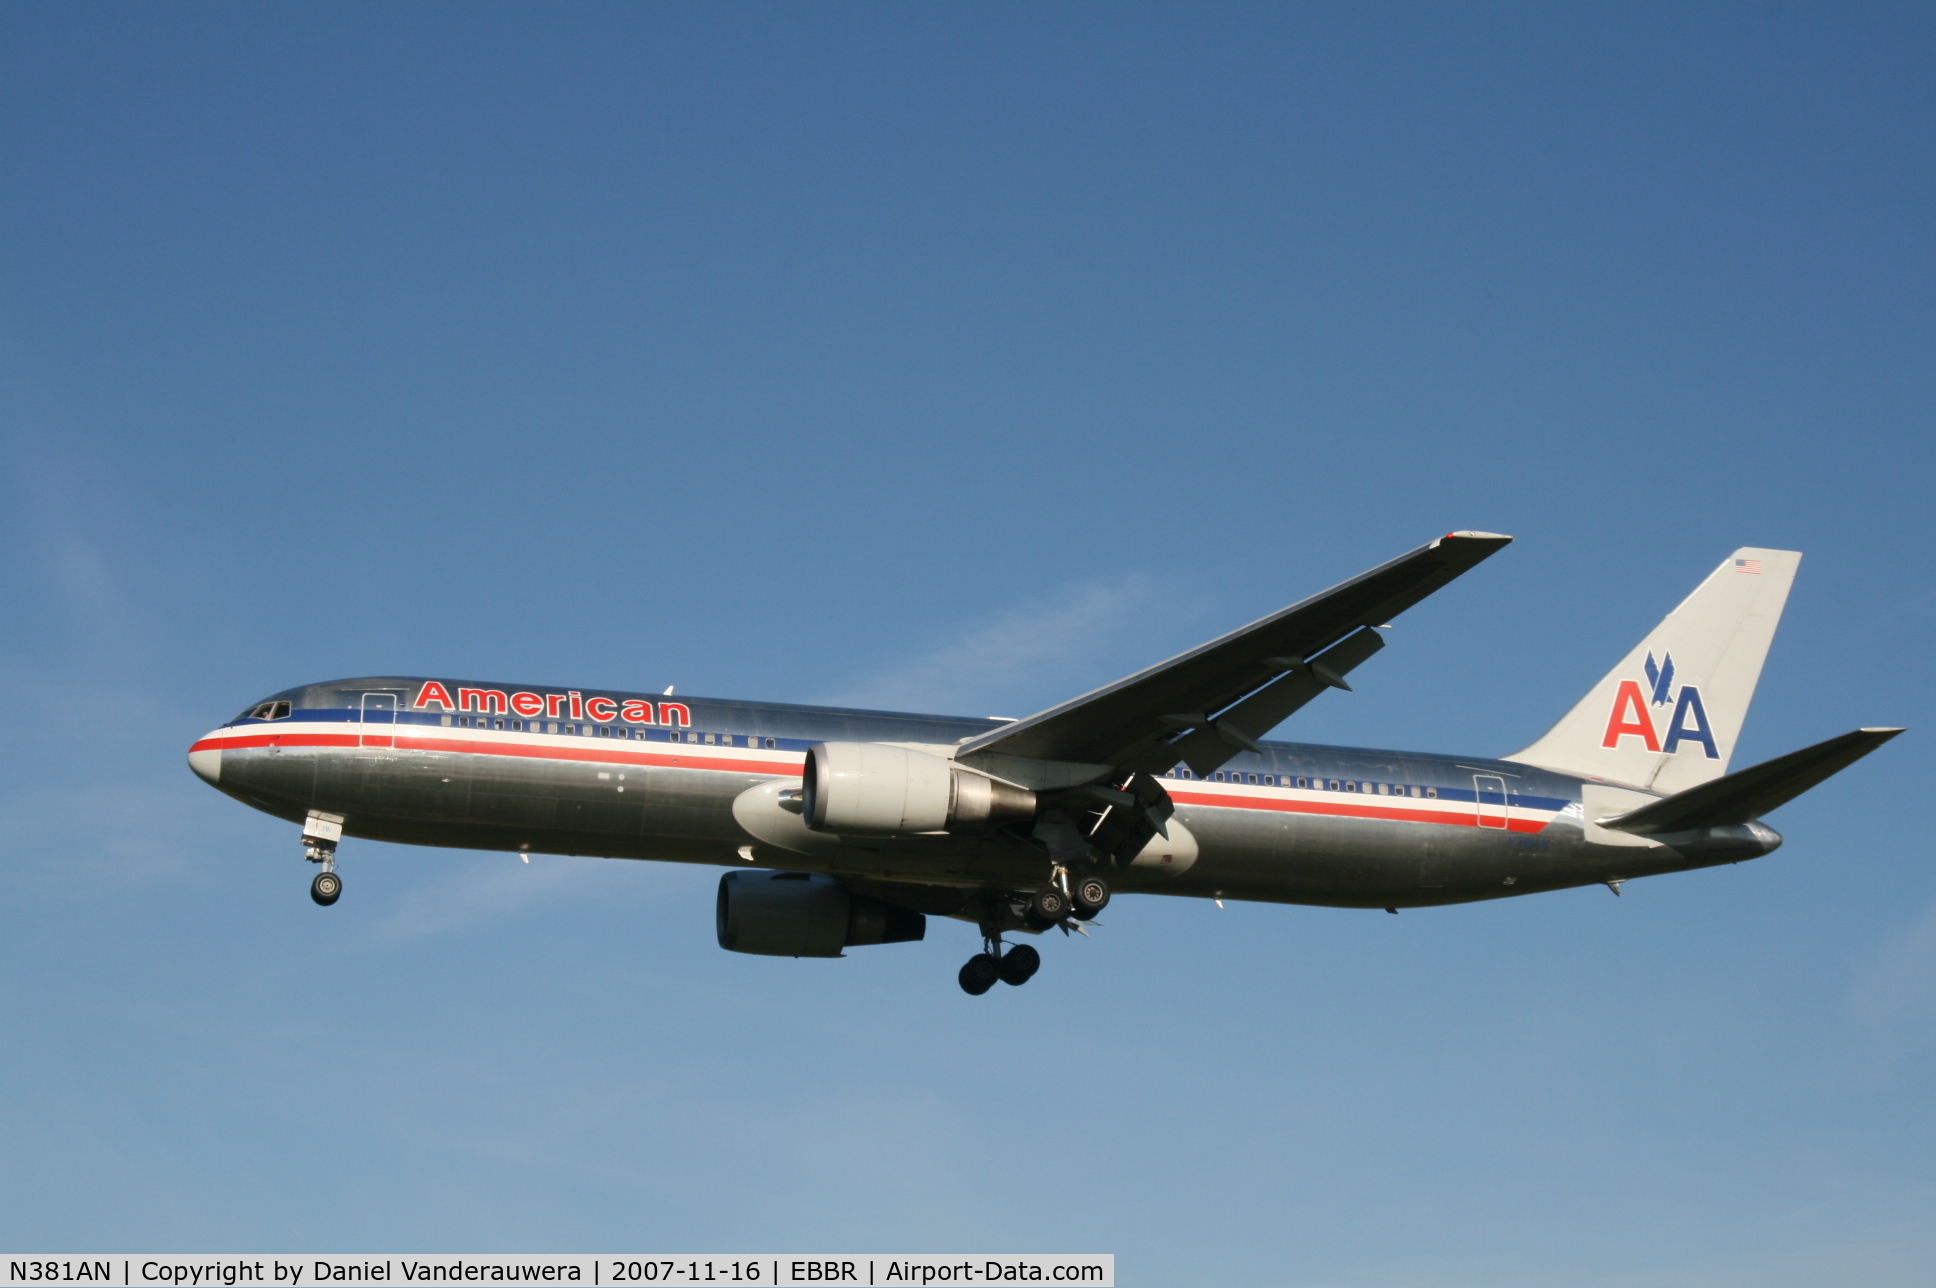 N381AN, 1993 Boeing 767-323 C/N 25450, arrival of flight AA172 to rwy 25L